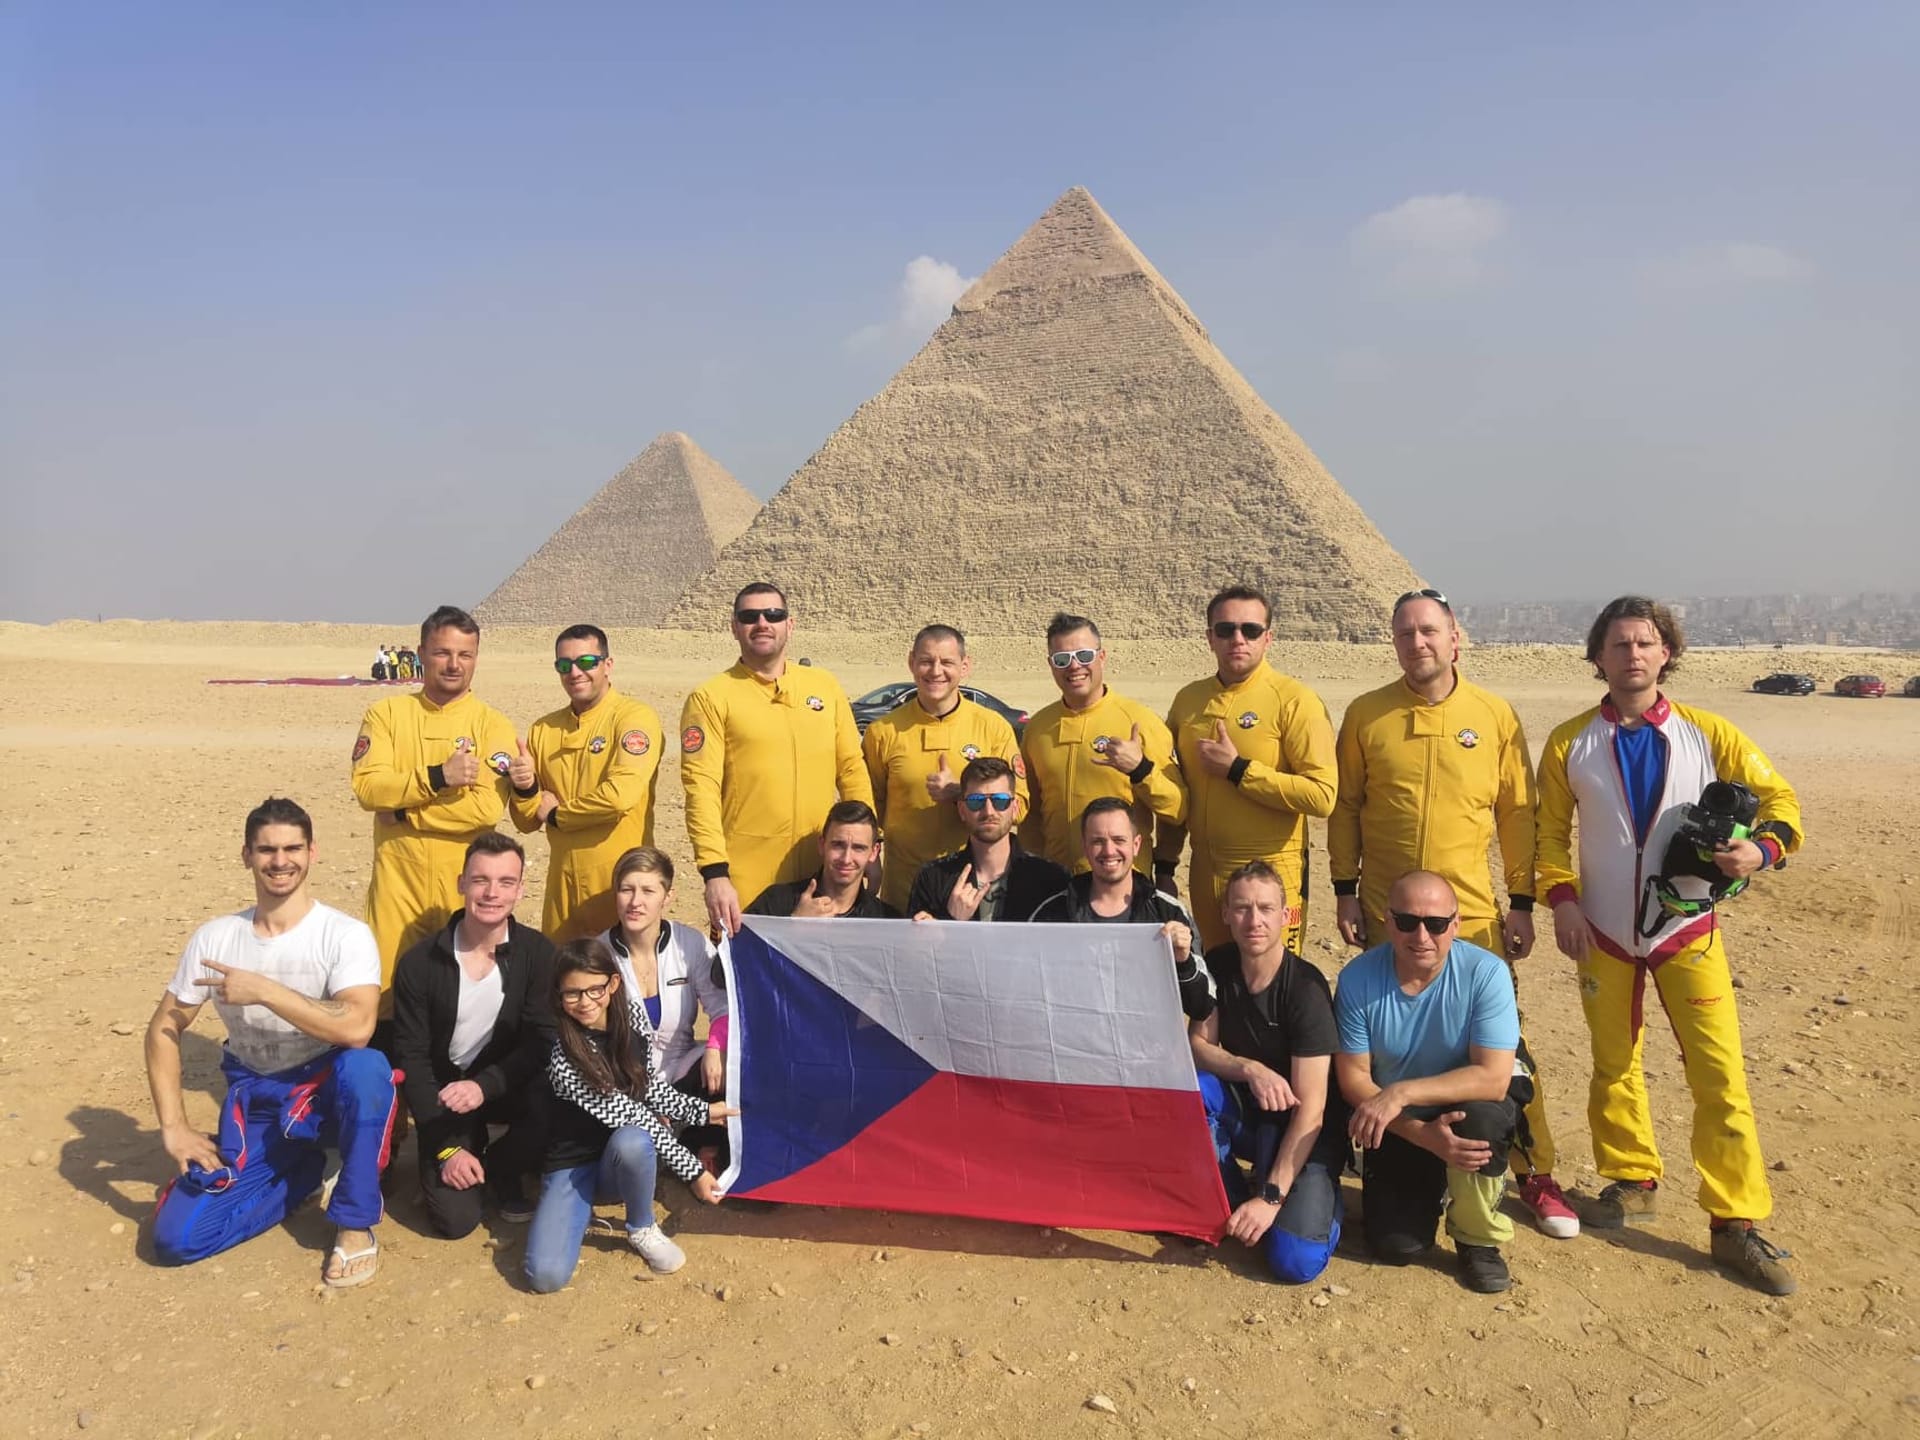 Česká vlajka zavlála u egyptských pyramid